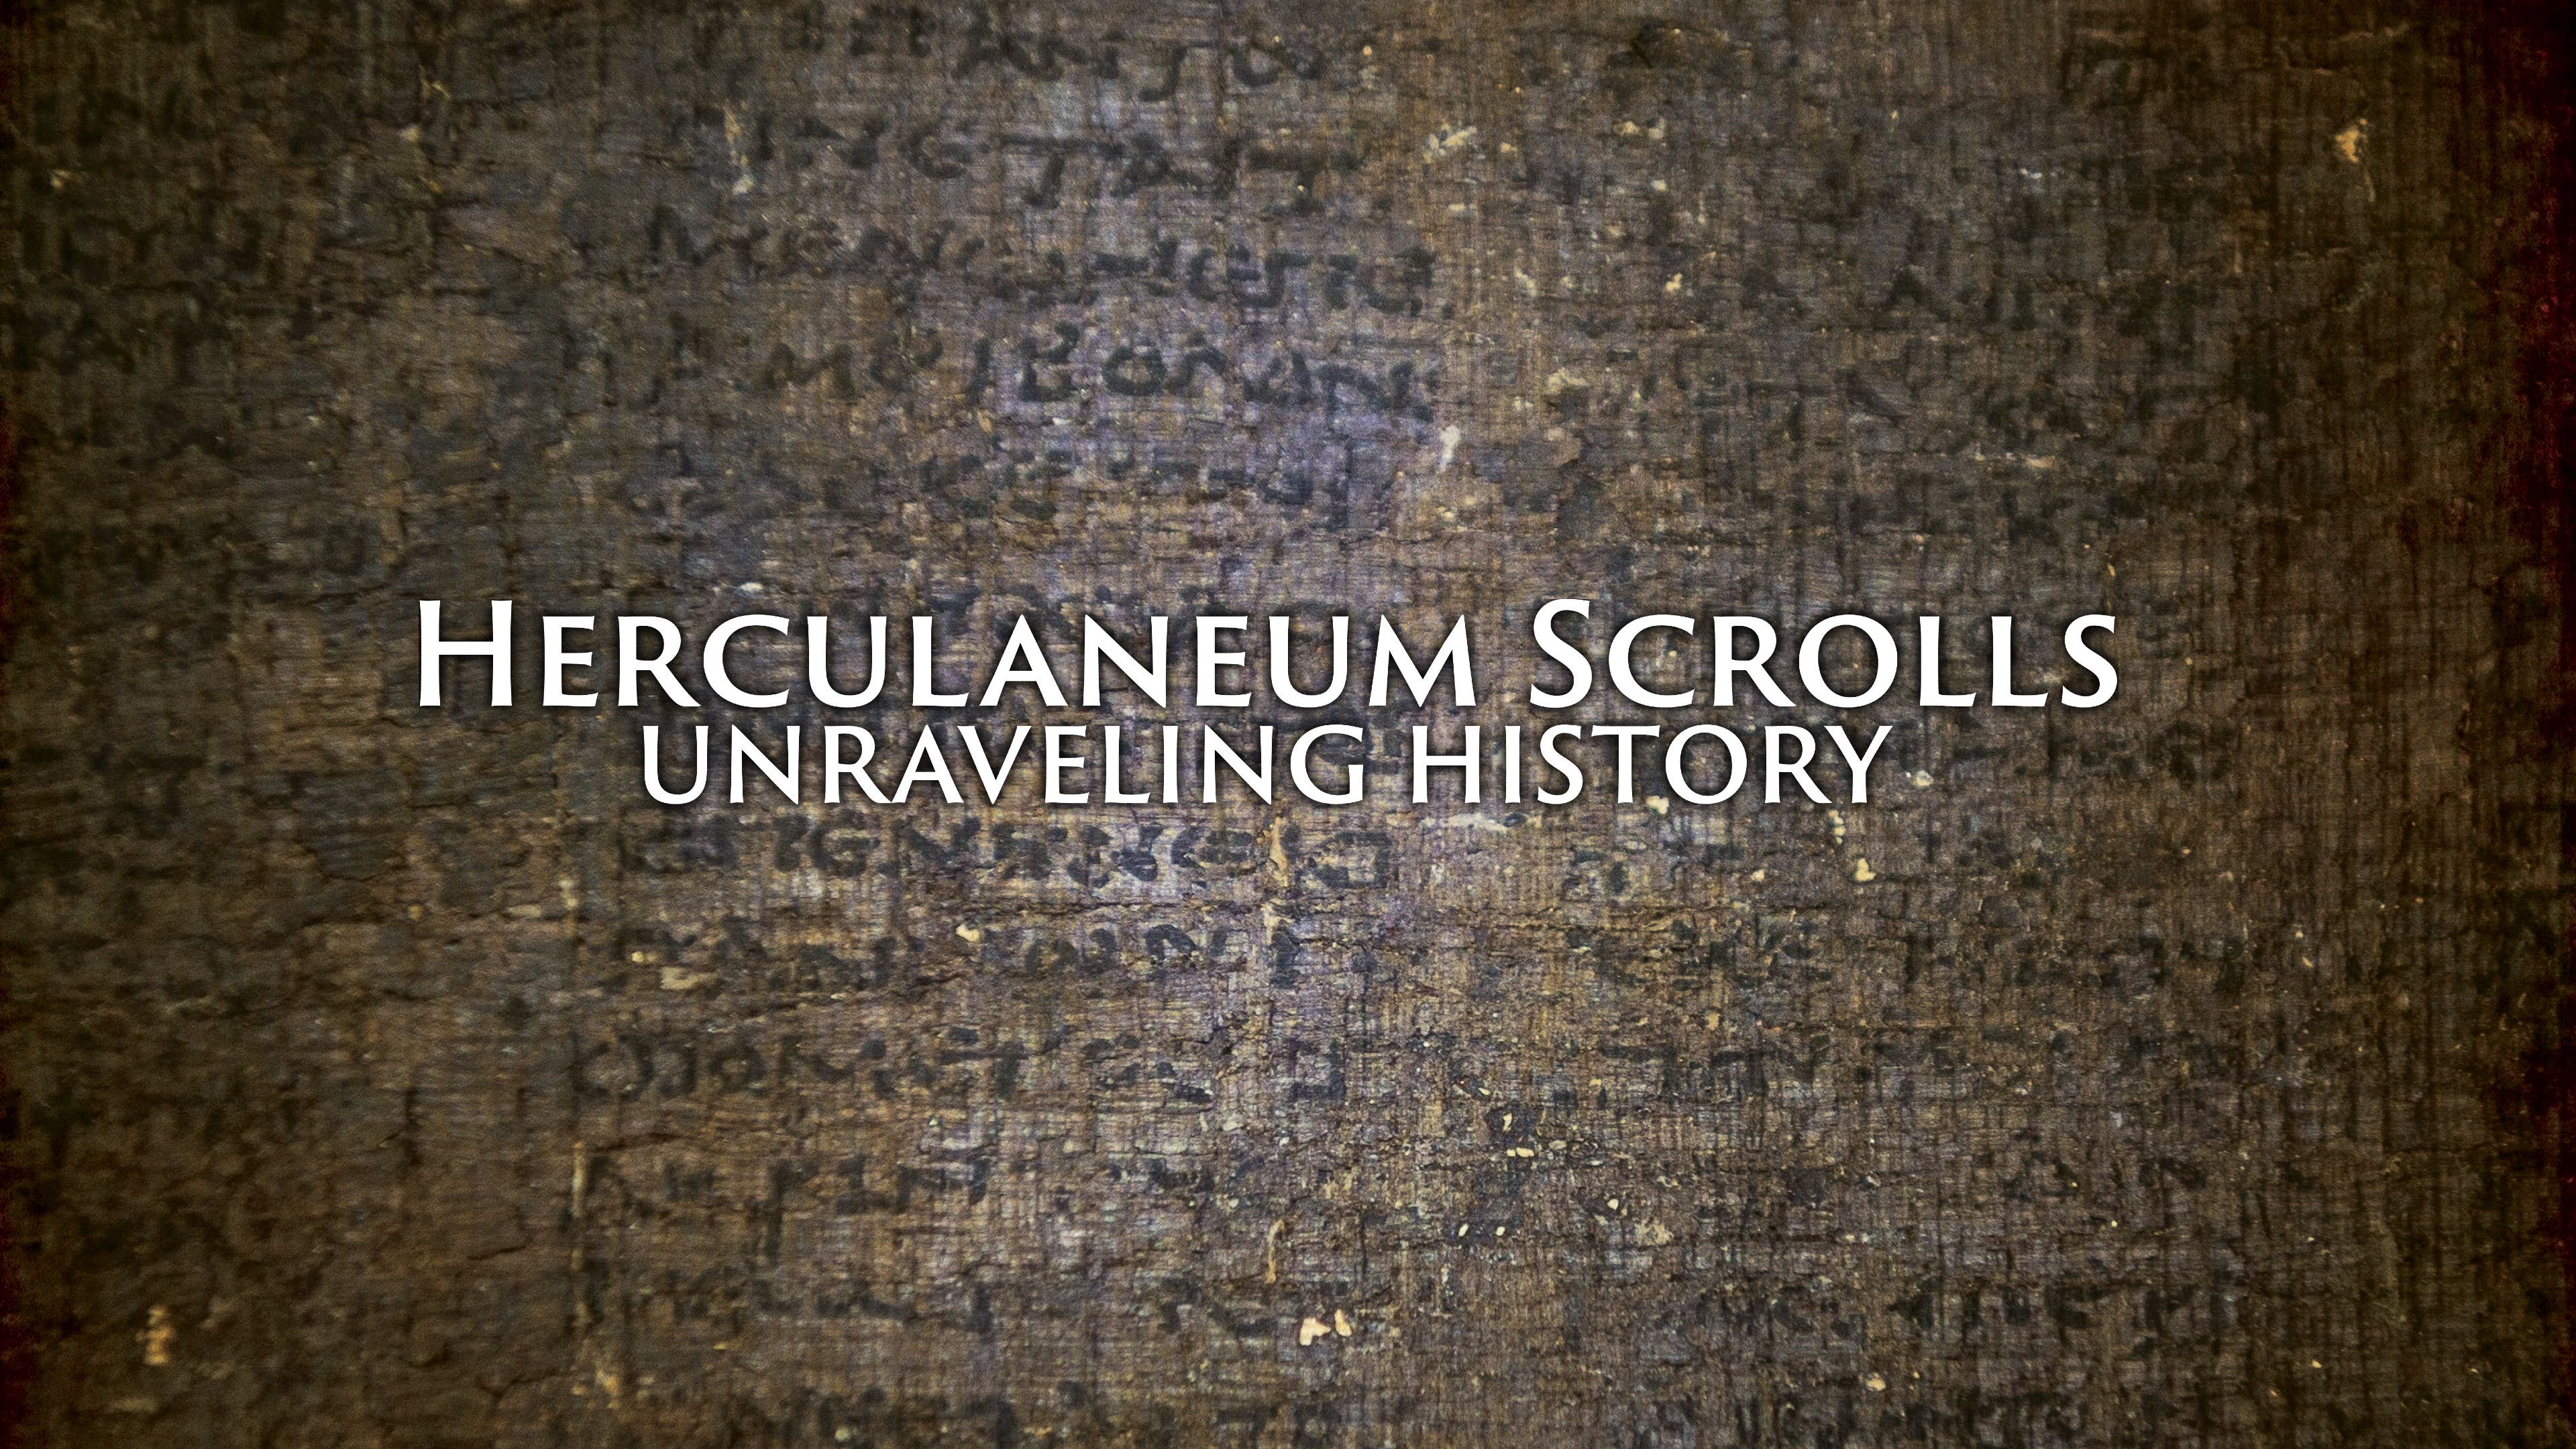 Herculaneum Scrolls: Unraveling History